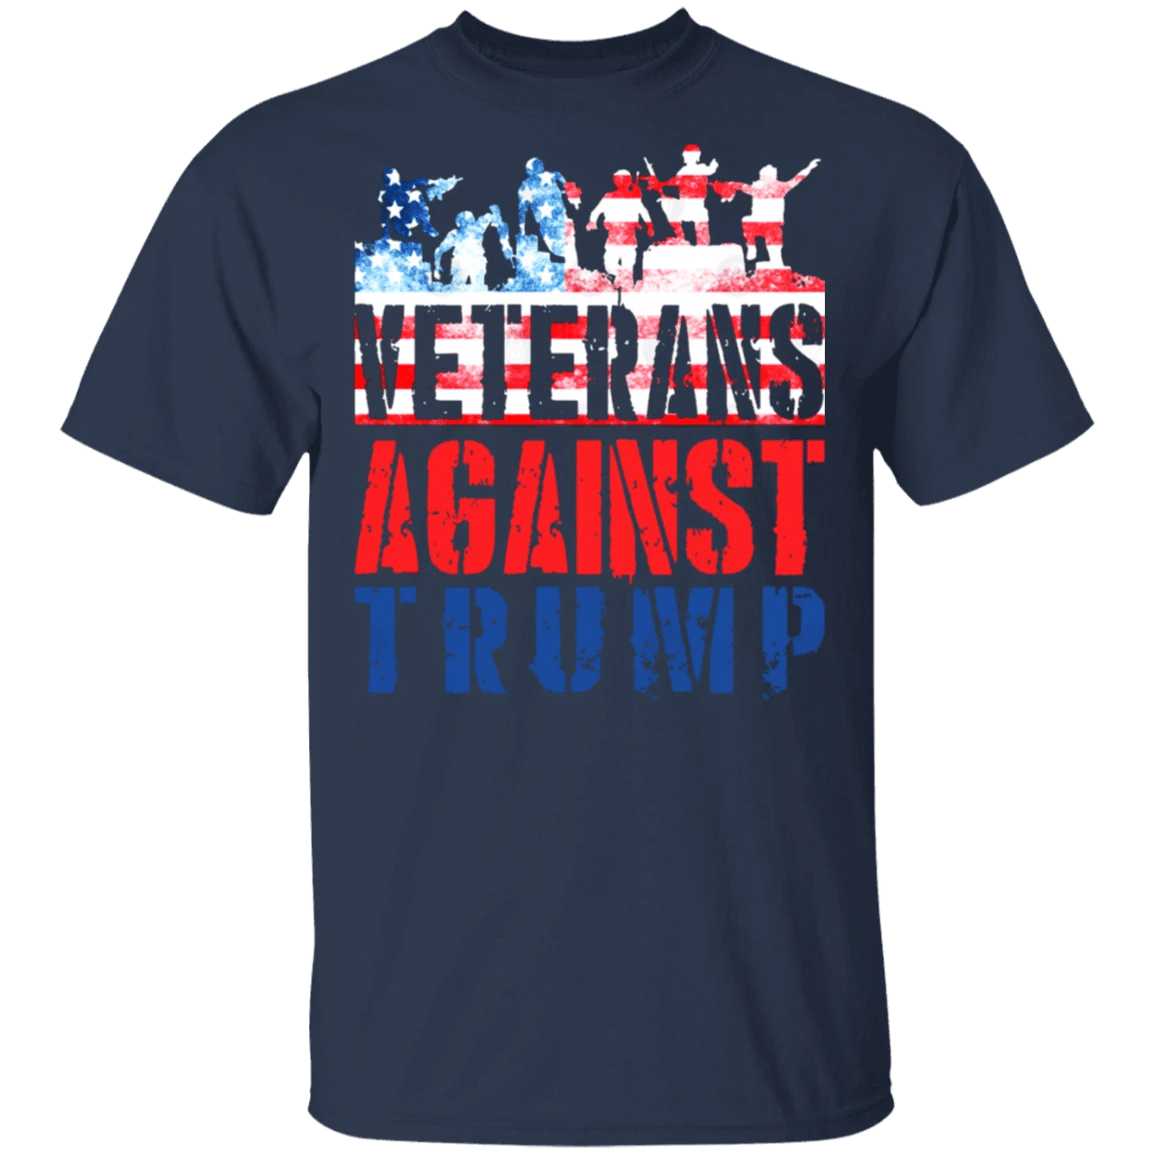 Veterans Against Trump Anti-Trump T-Shirt For Republicans Against Trump Biden 2020 Merch